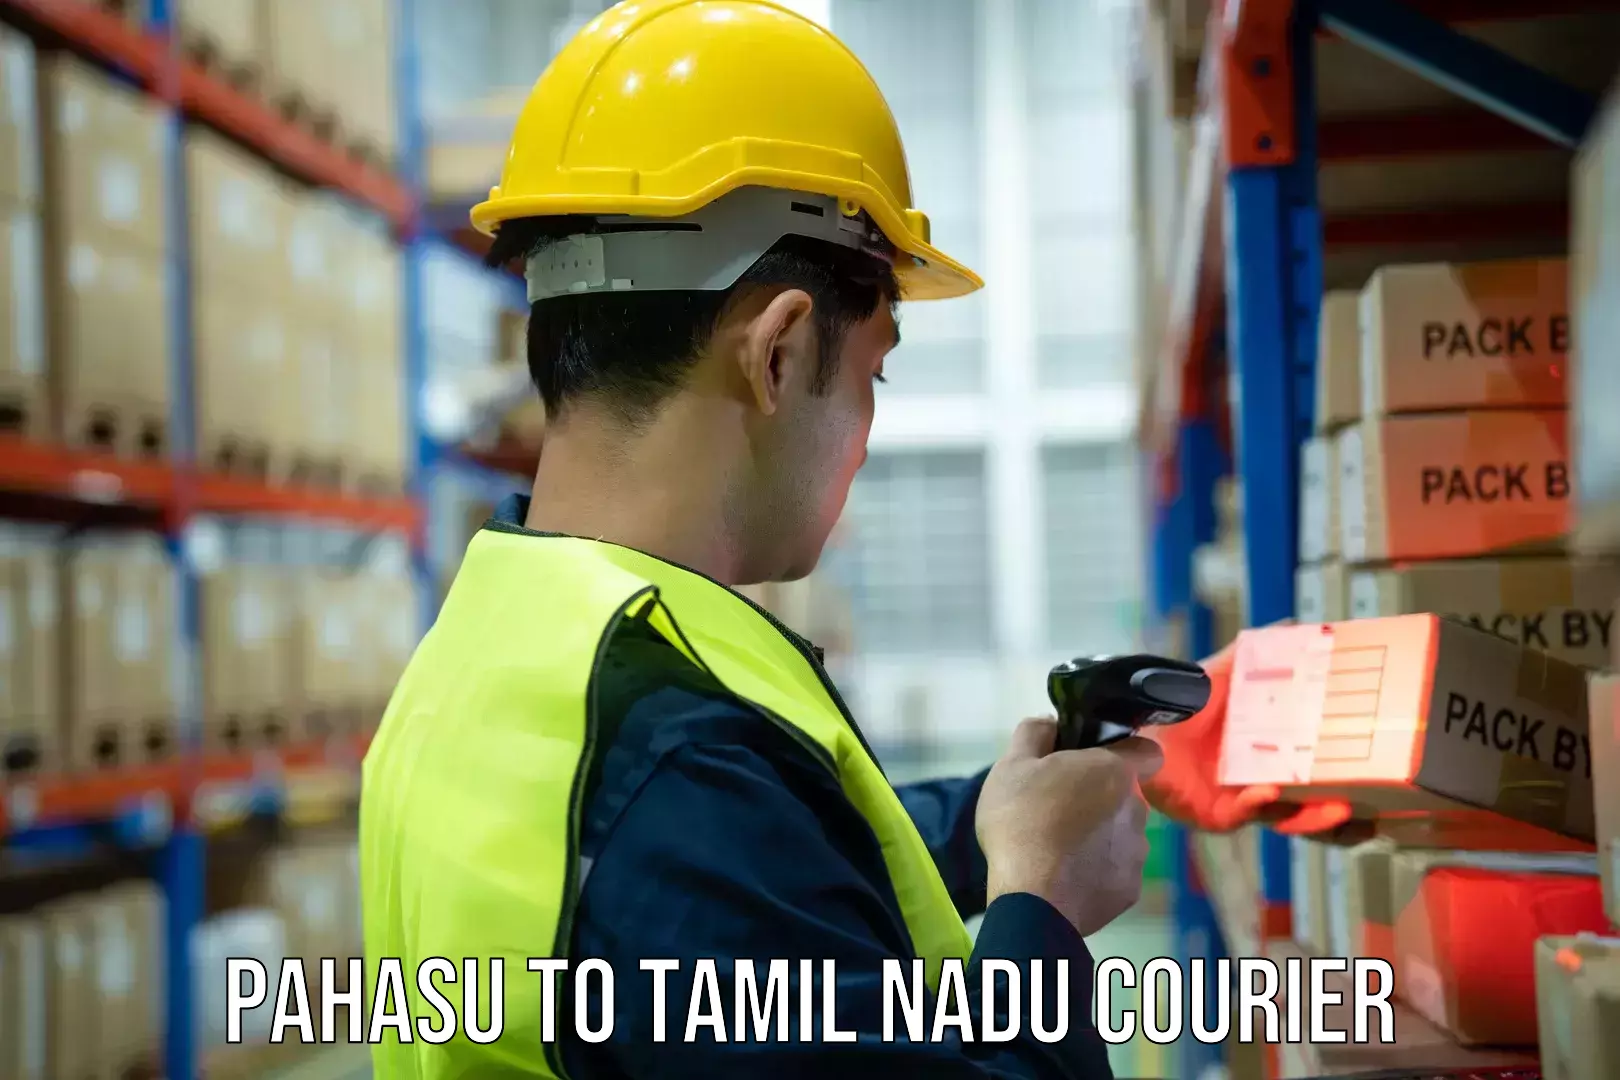 Easy return solutions Pahasu to Tamil Nadu